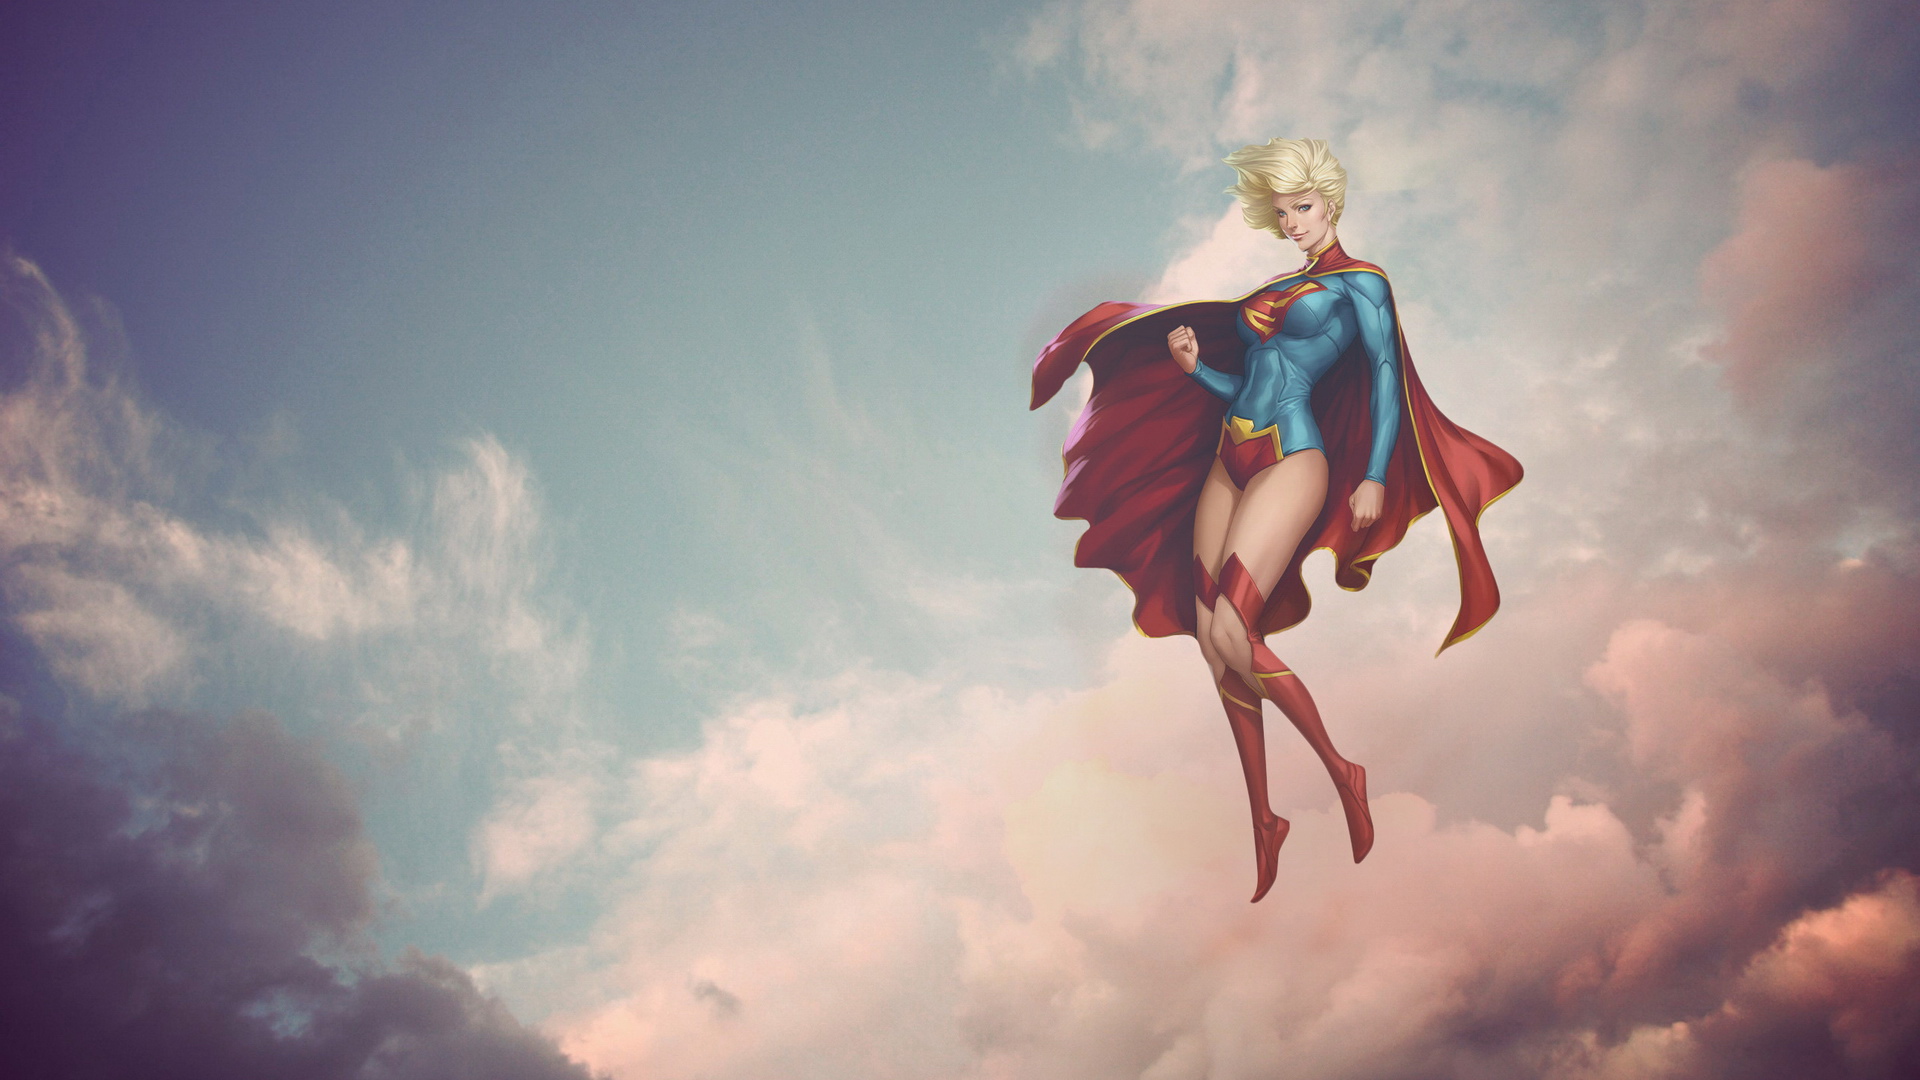 General 1920x1080 women fantasy art sky clouds blonde cape superhero DC Comics superheroines Artgerm Supergirl digital art